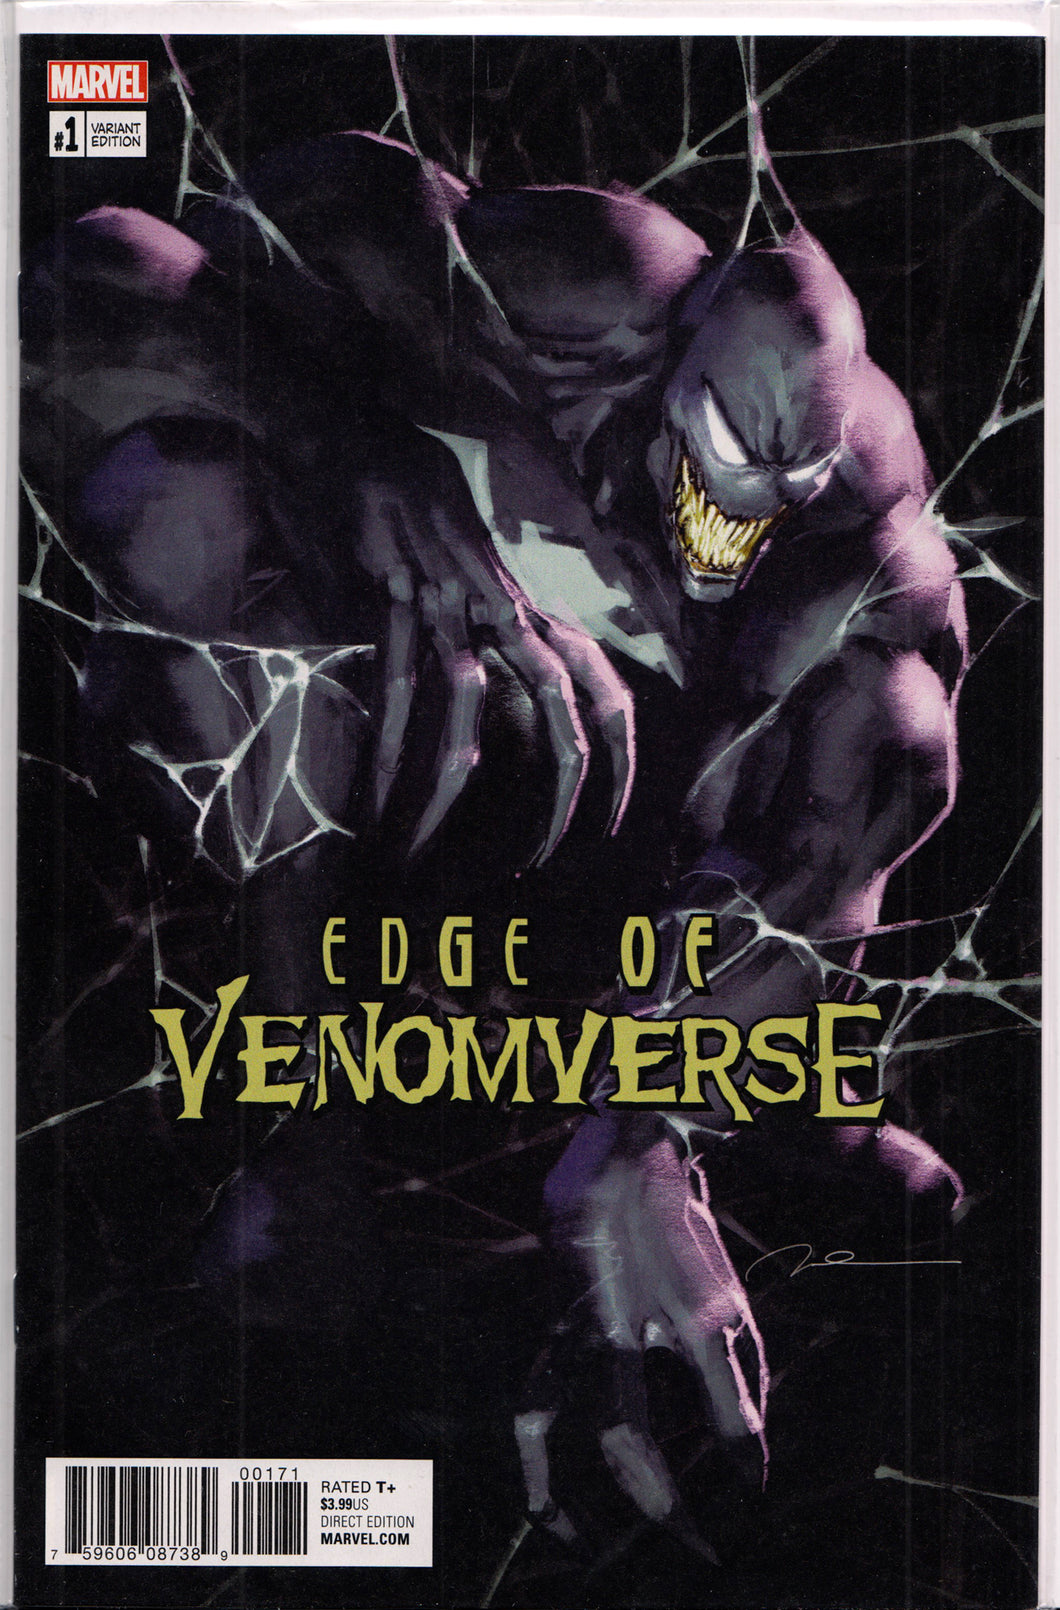 EDGE OF VENOMVERSE #1 (EXCLUSIVE VARIANT COVER) COMIC BOOK ~ Marvel Comics